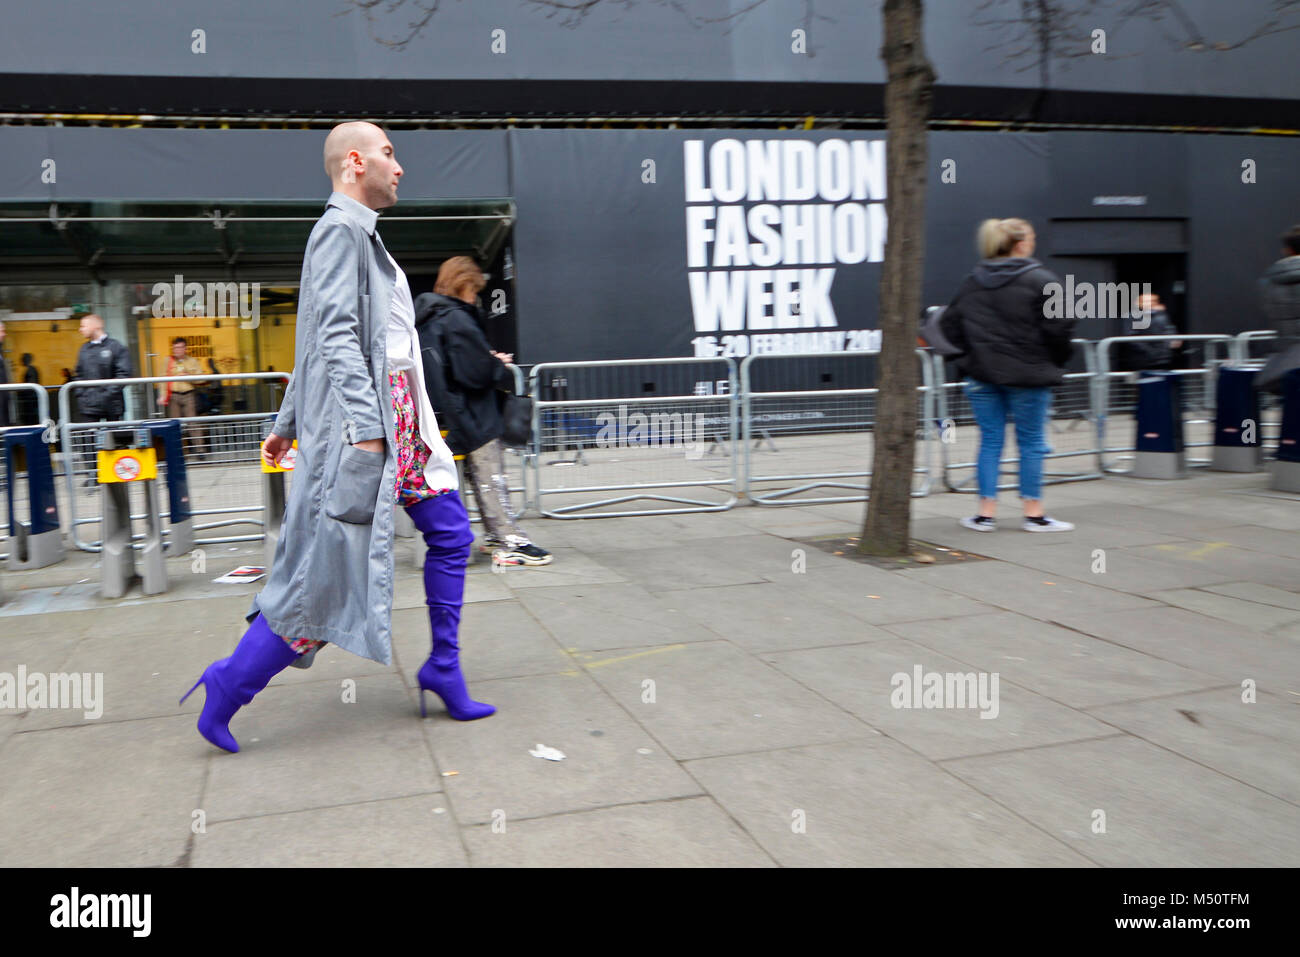 Mann In High Heels Overknee Stiefel Feminin Vorbei An Der London